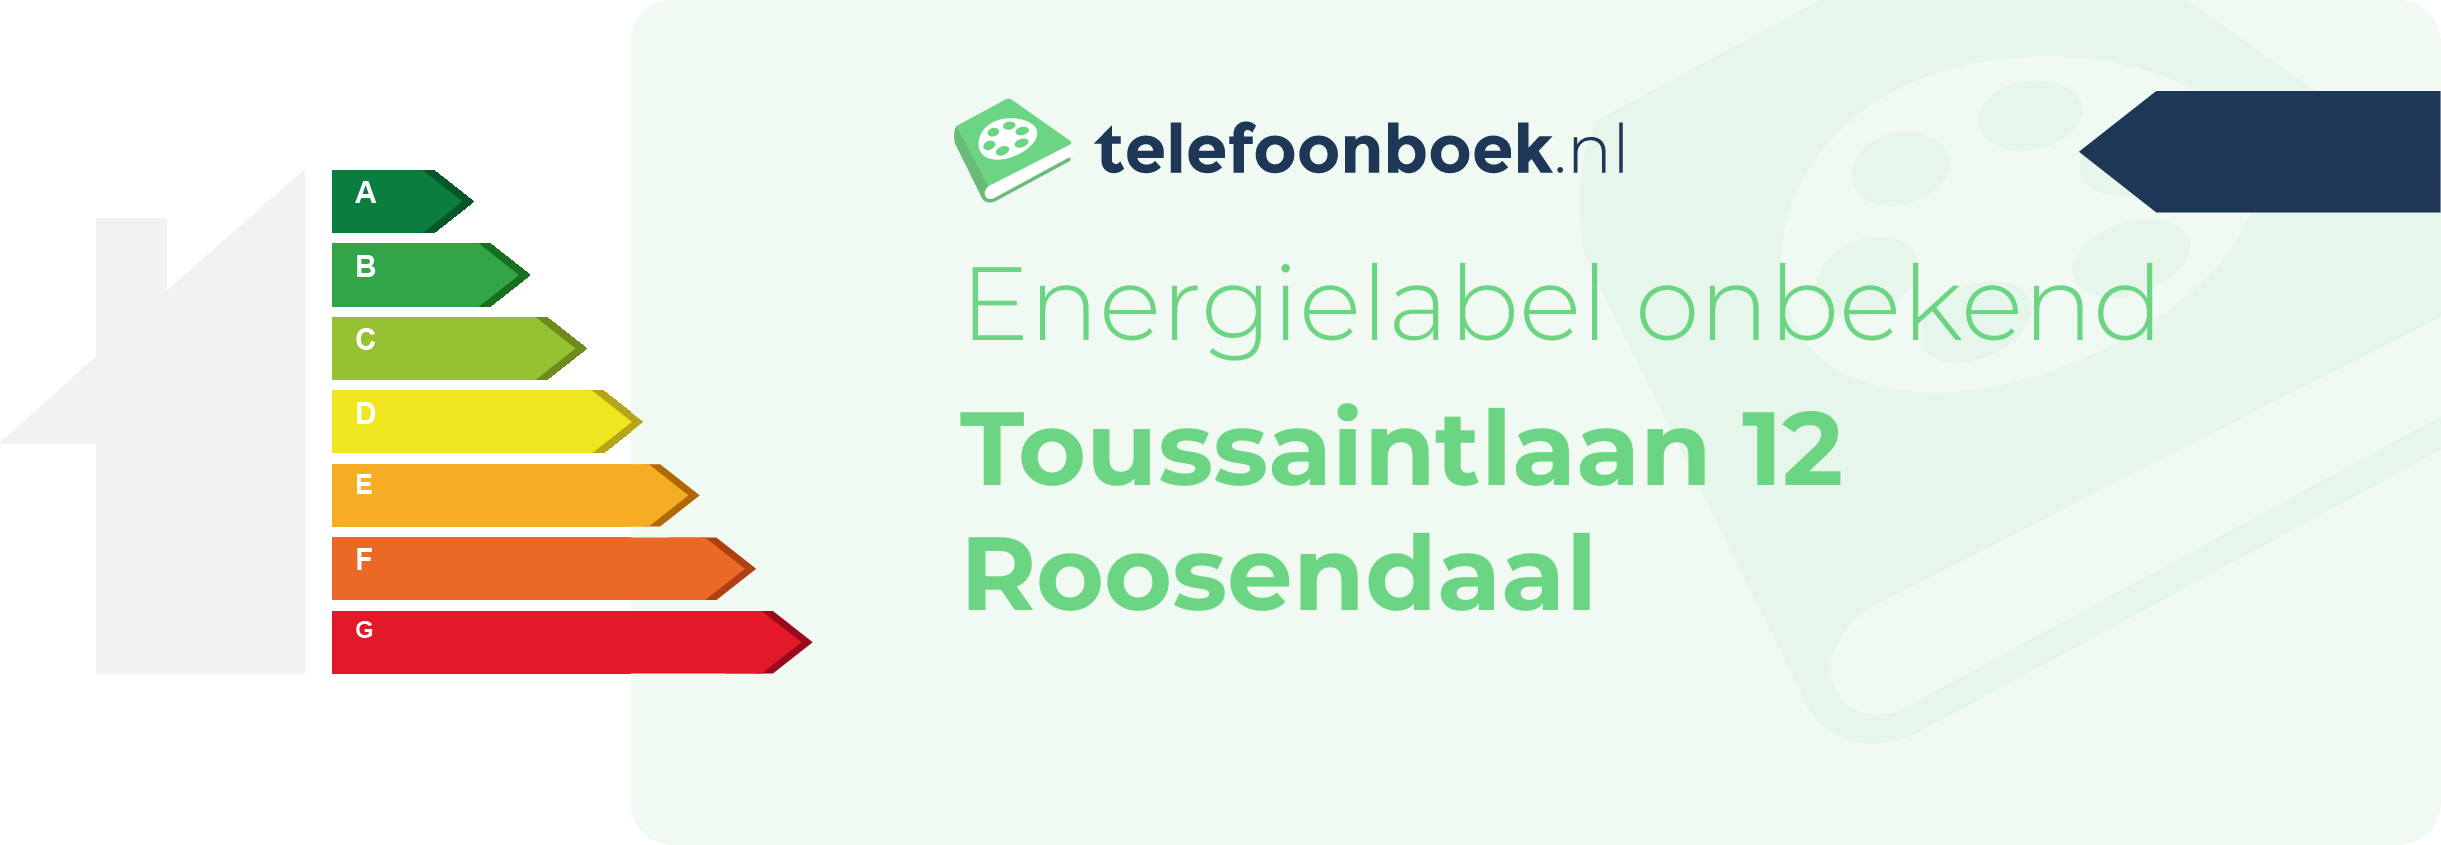 Energielabel Toussaintlaan 12 Roosendaal